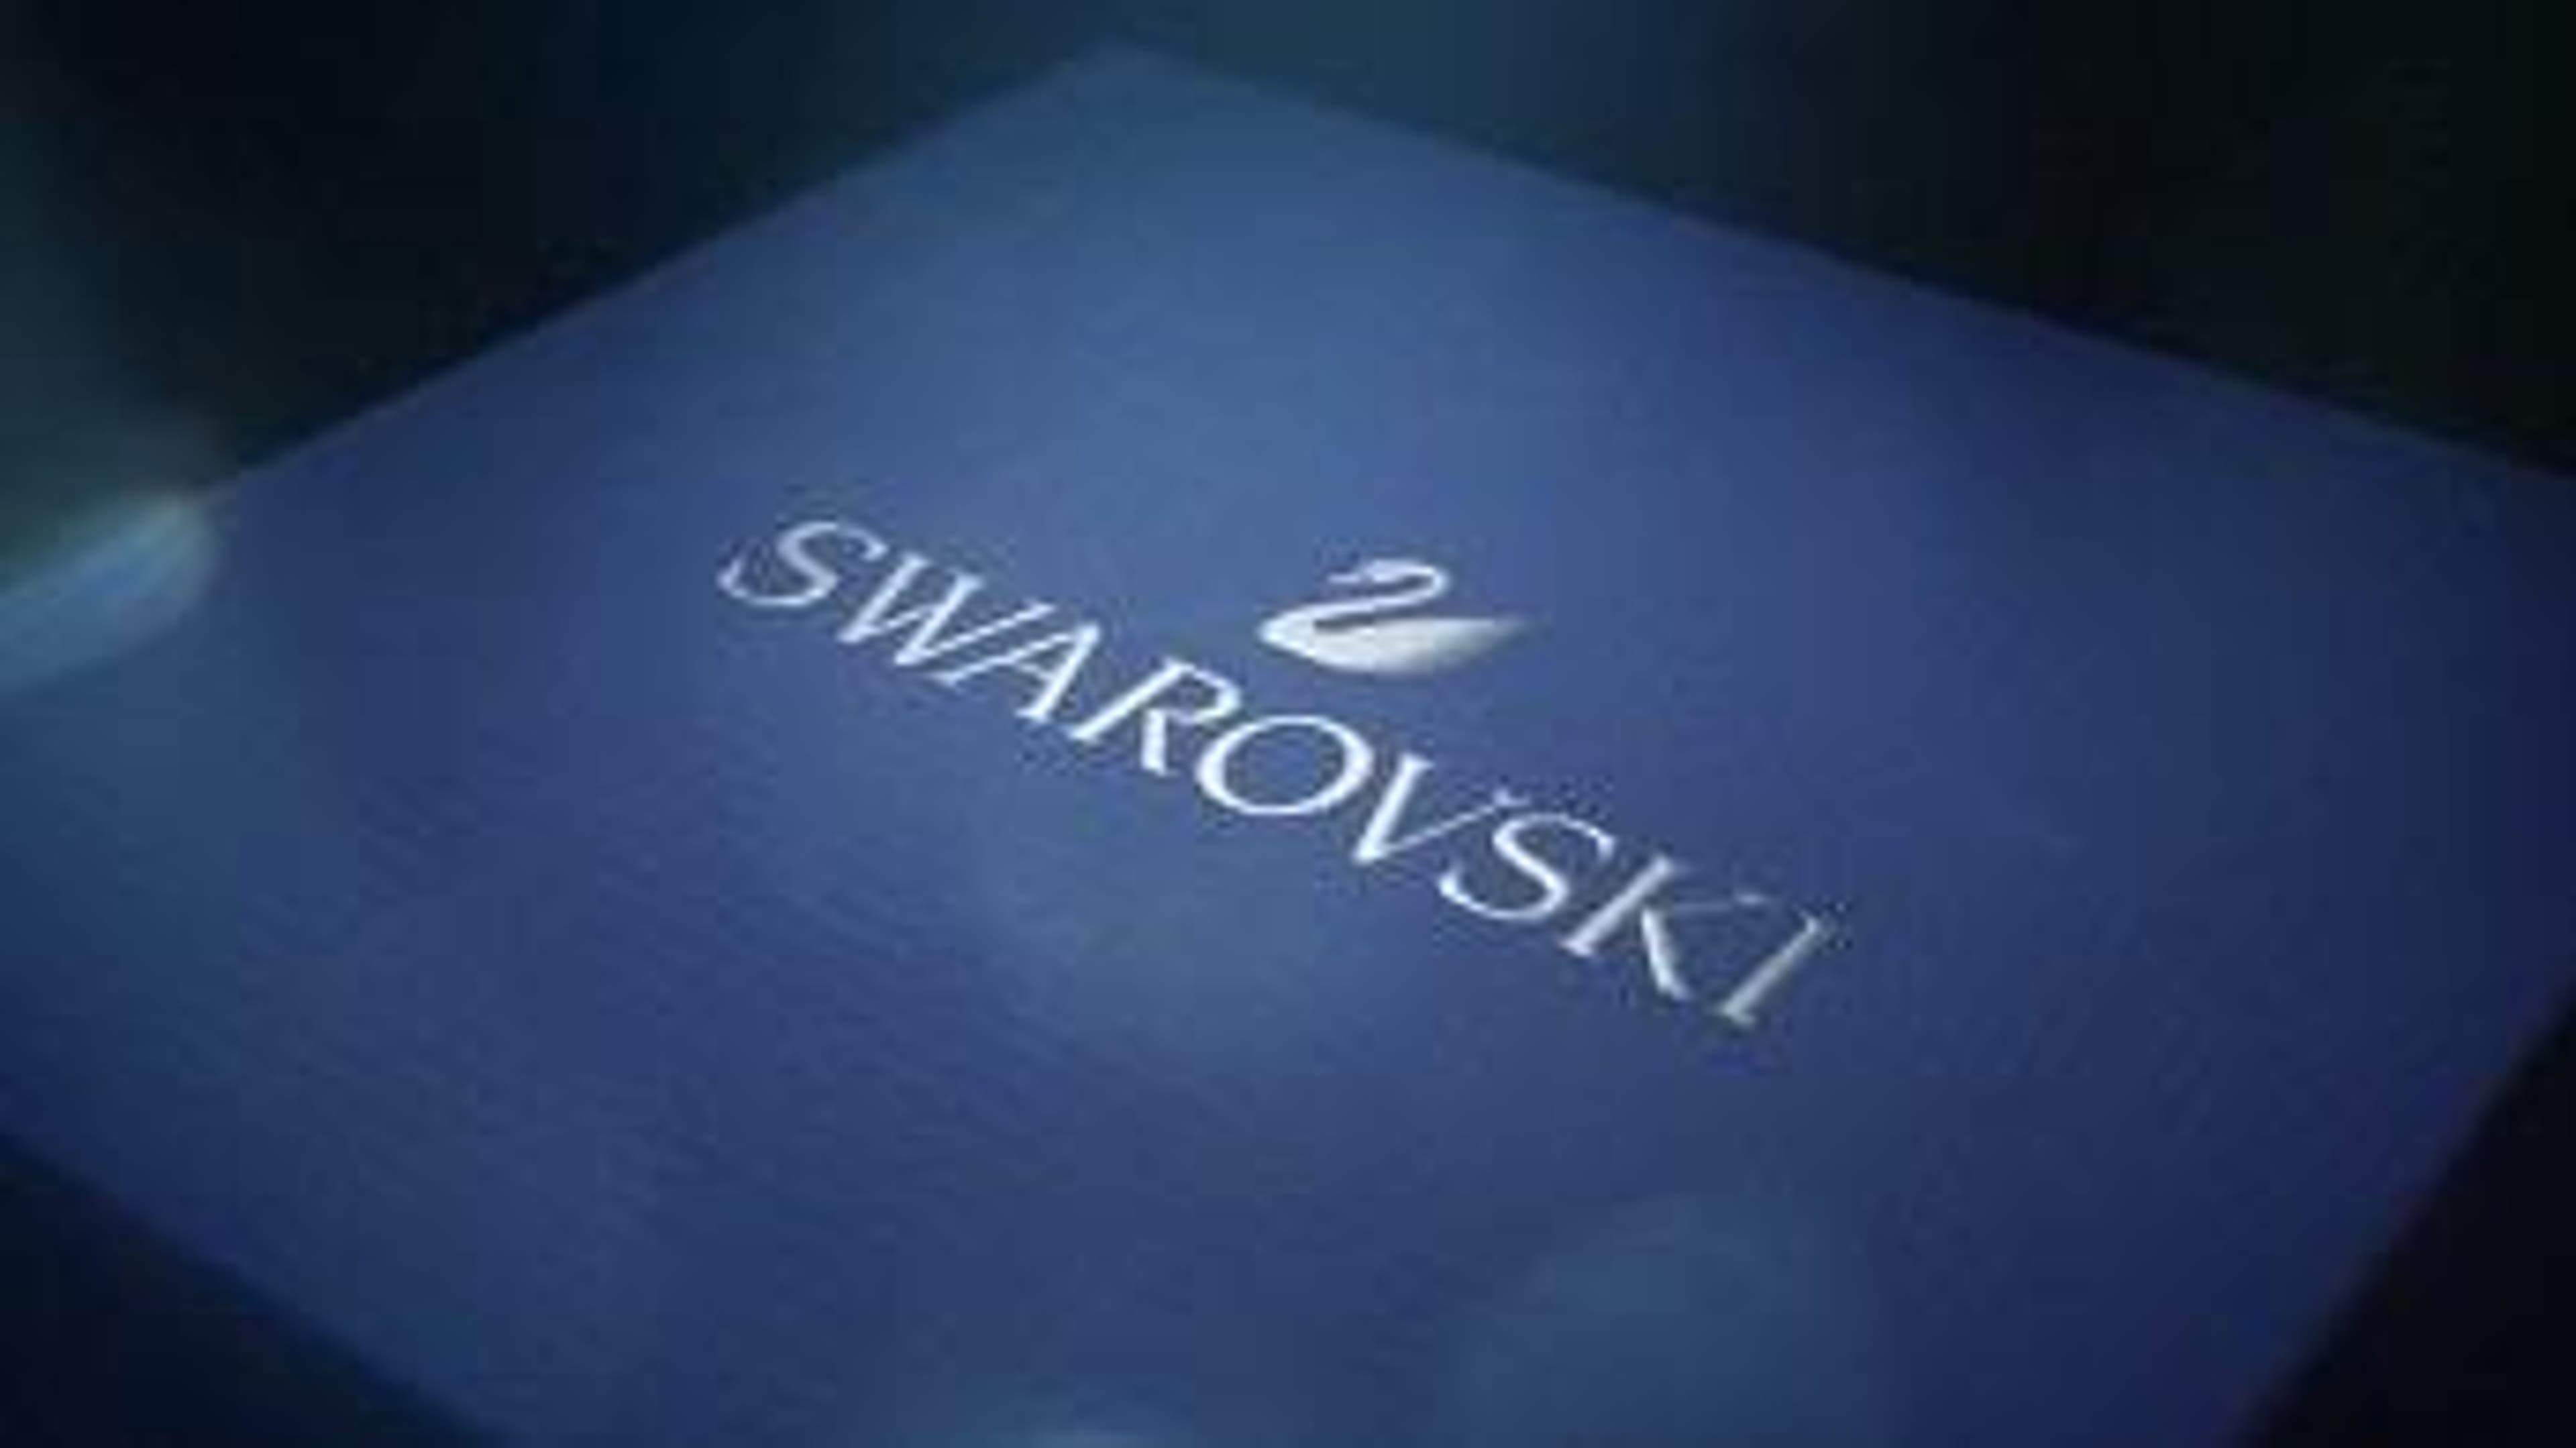  The Swarovski name & signature swan logo atop a blue gift box 